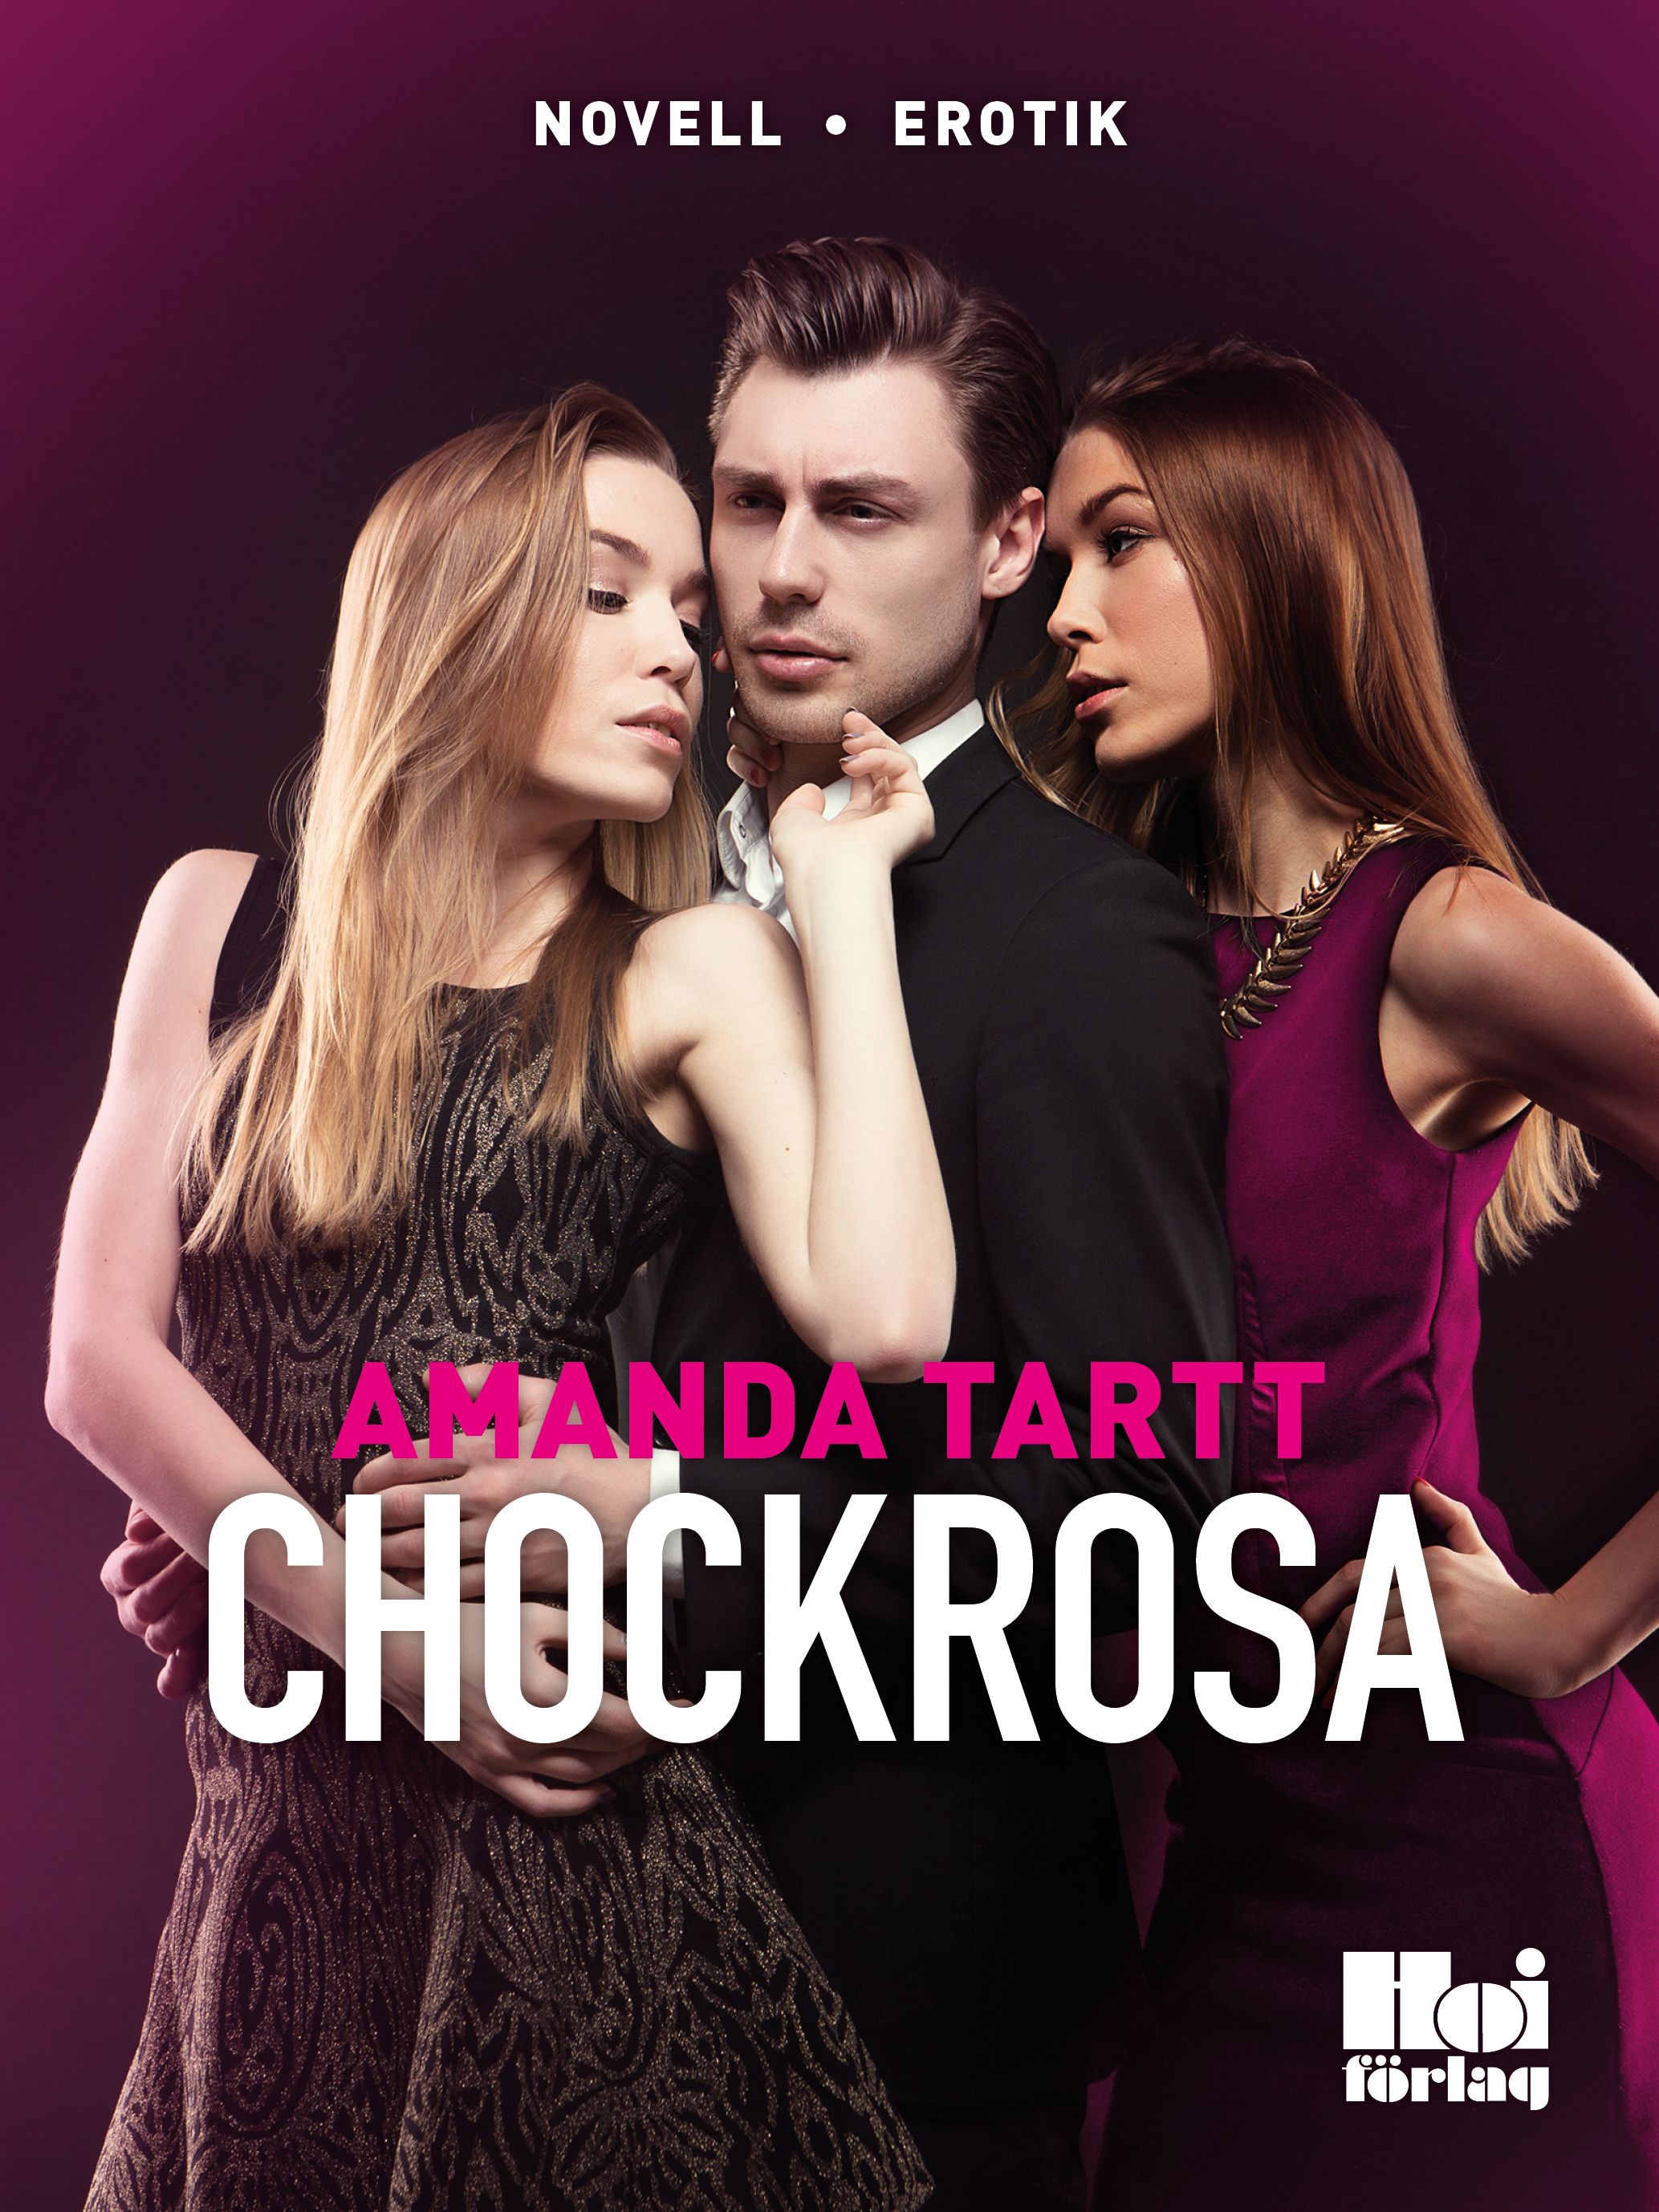 Chockrosa, eBook by Amanda Tartt